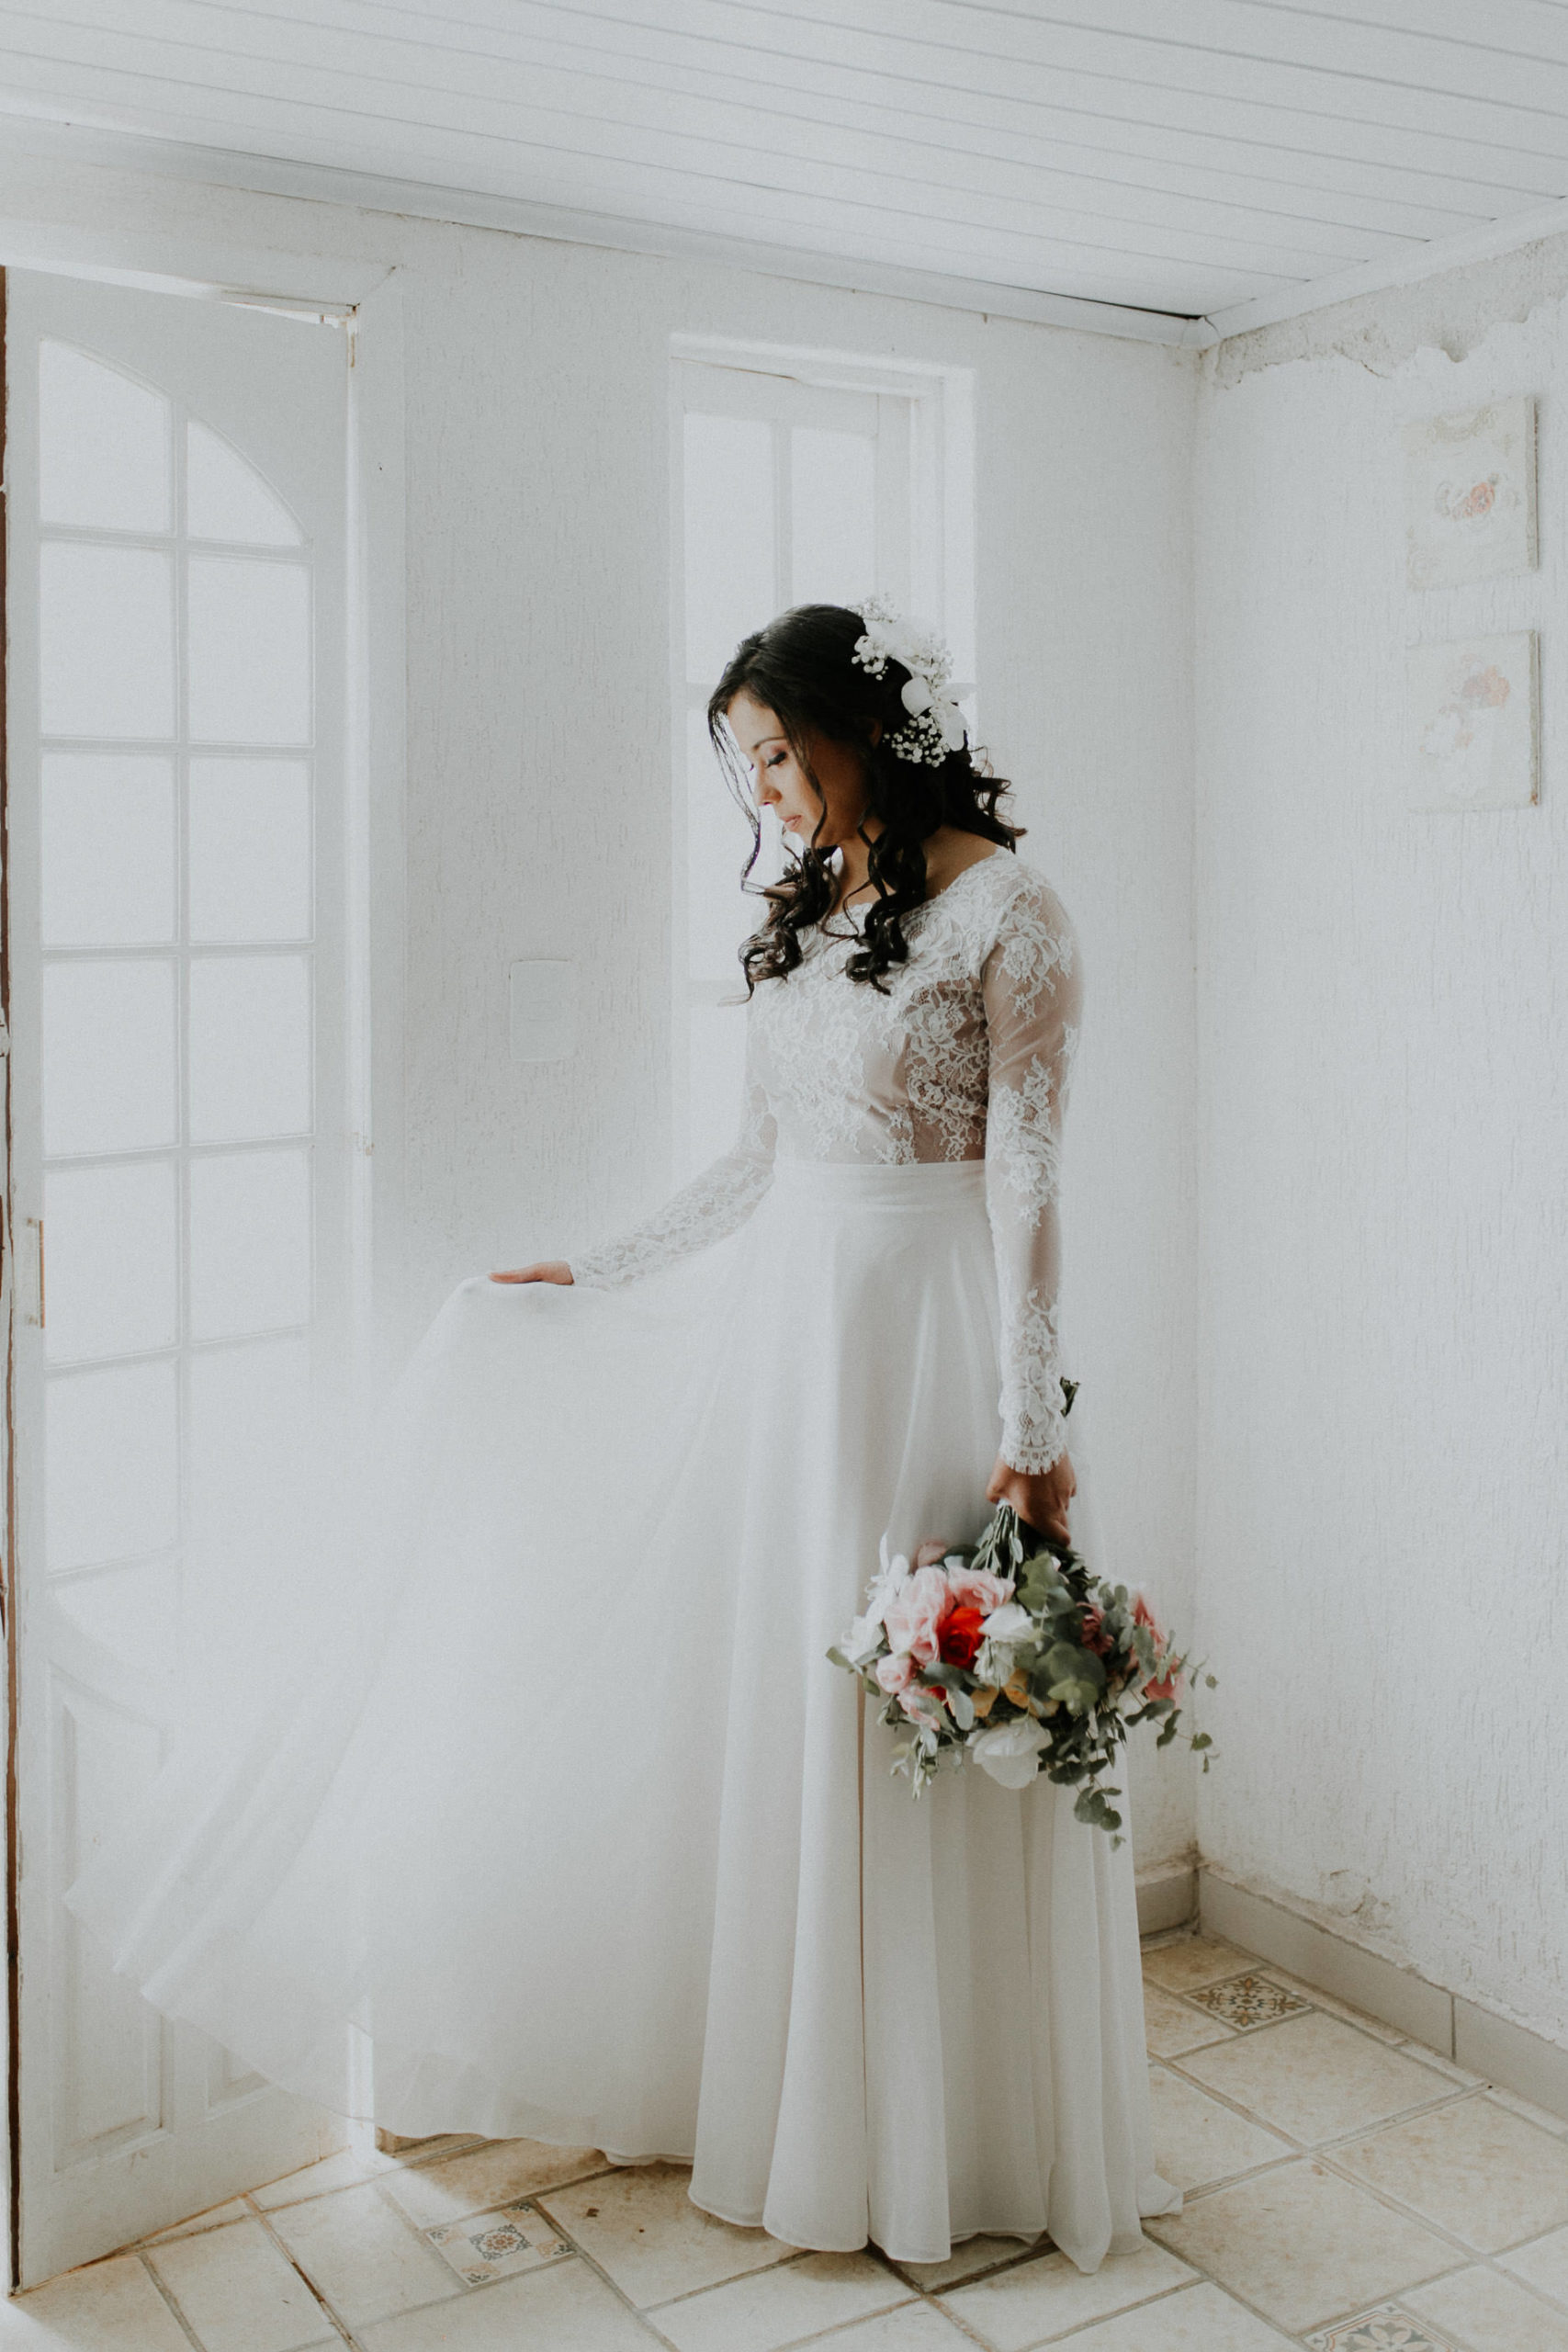 Karine Britto | Fotografia Minimalista | Casamentos Diurnos & Mini Weddings